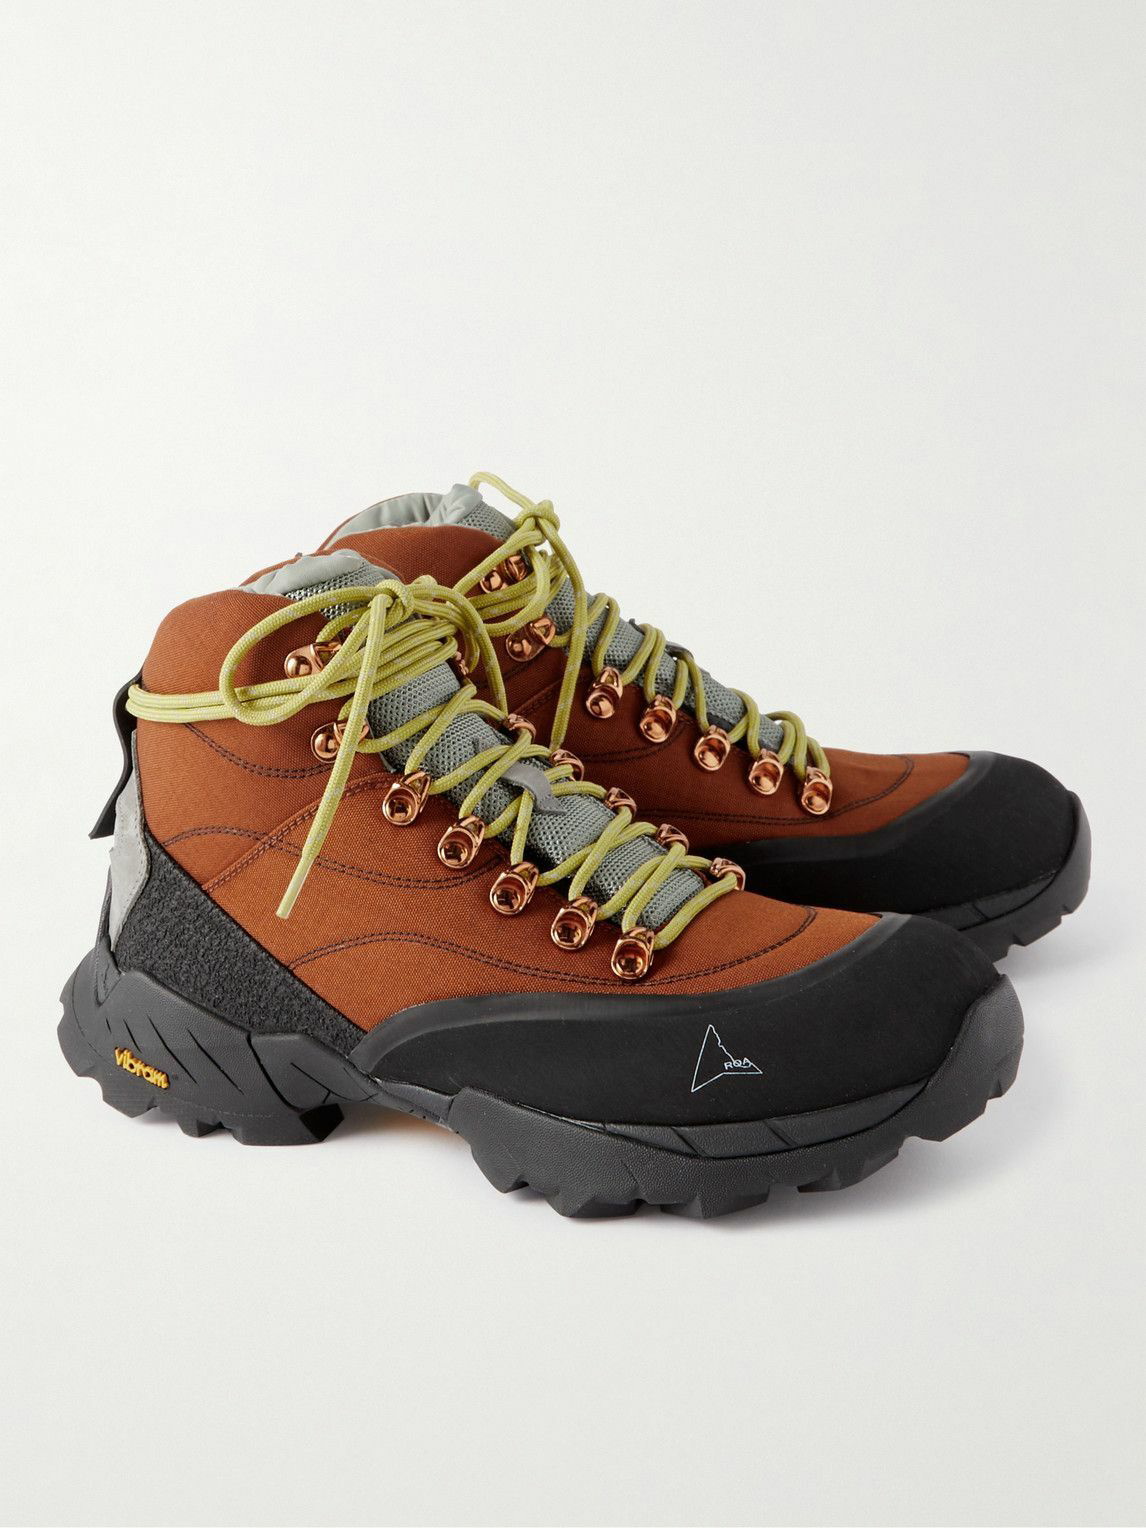 ROA Andreas lace-up hiking boots - Orange